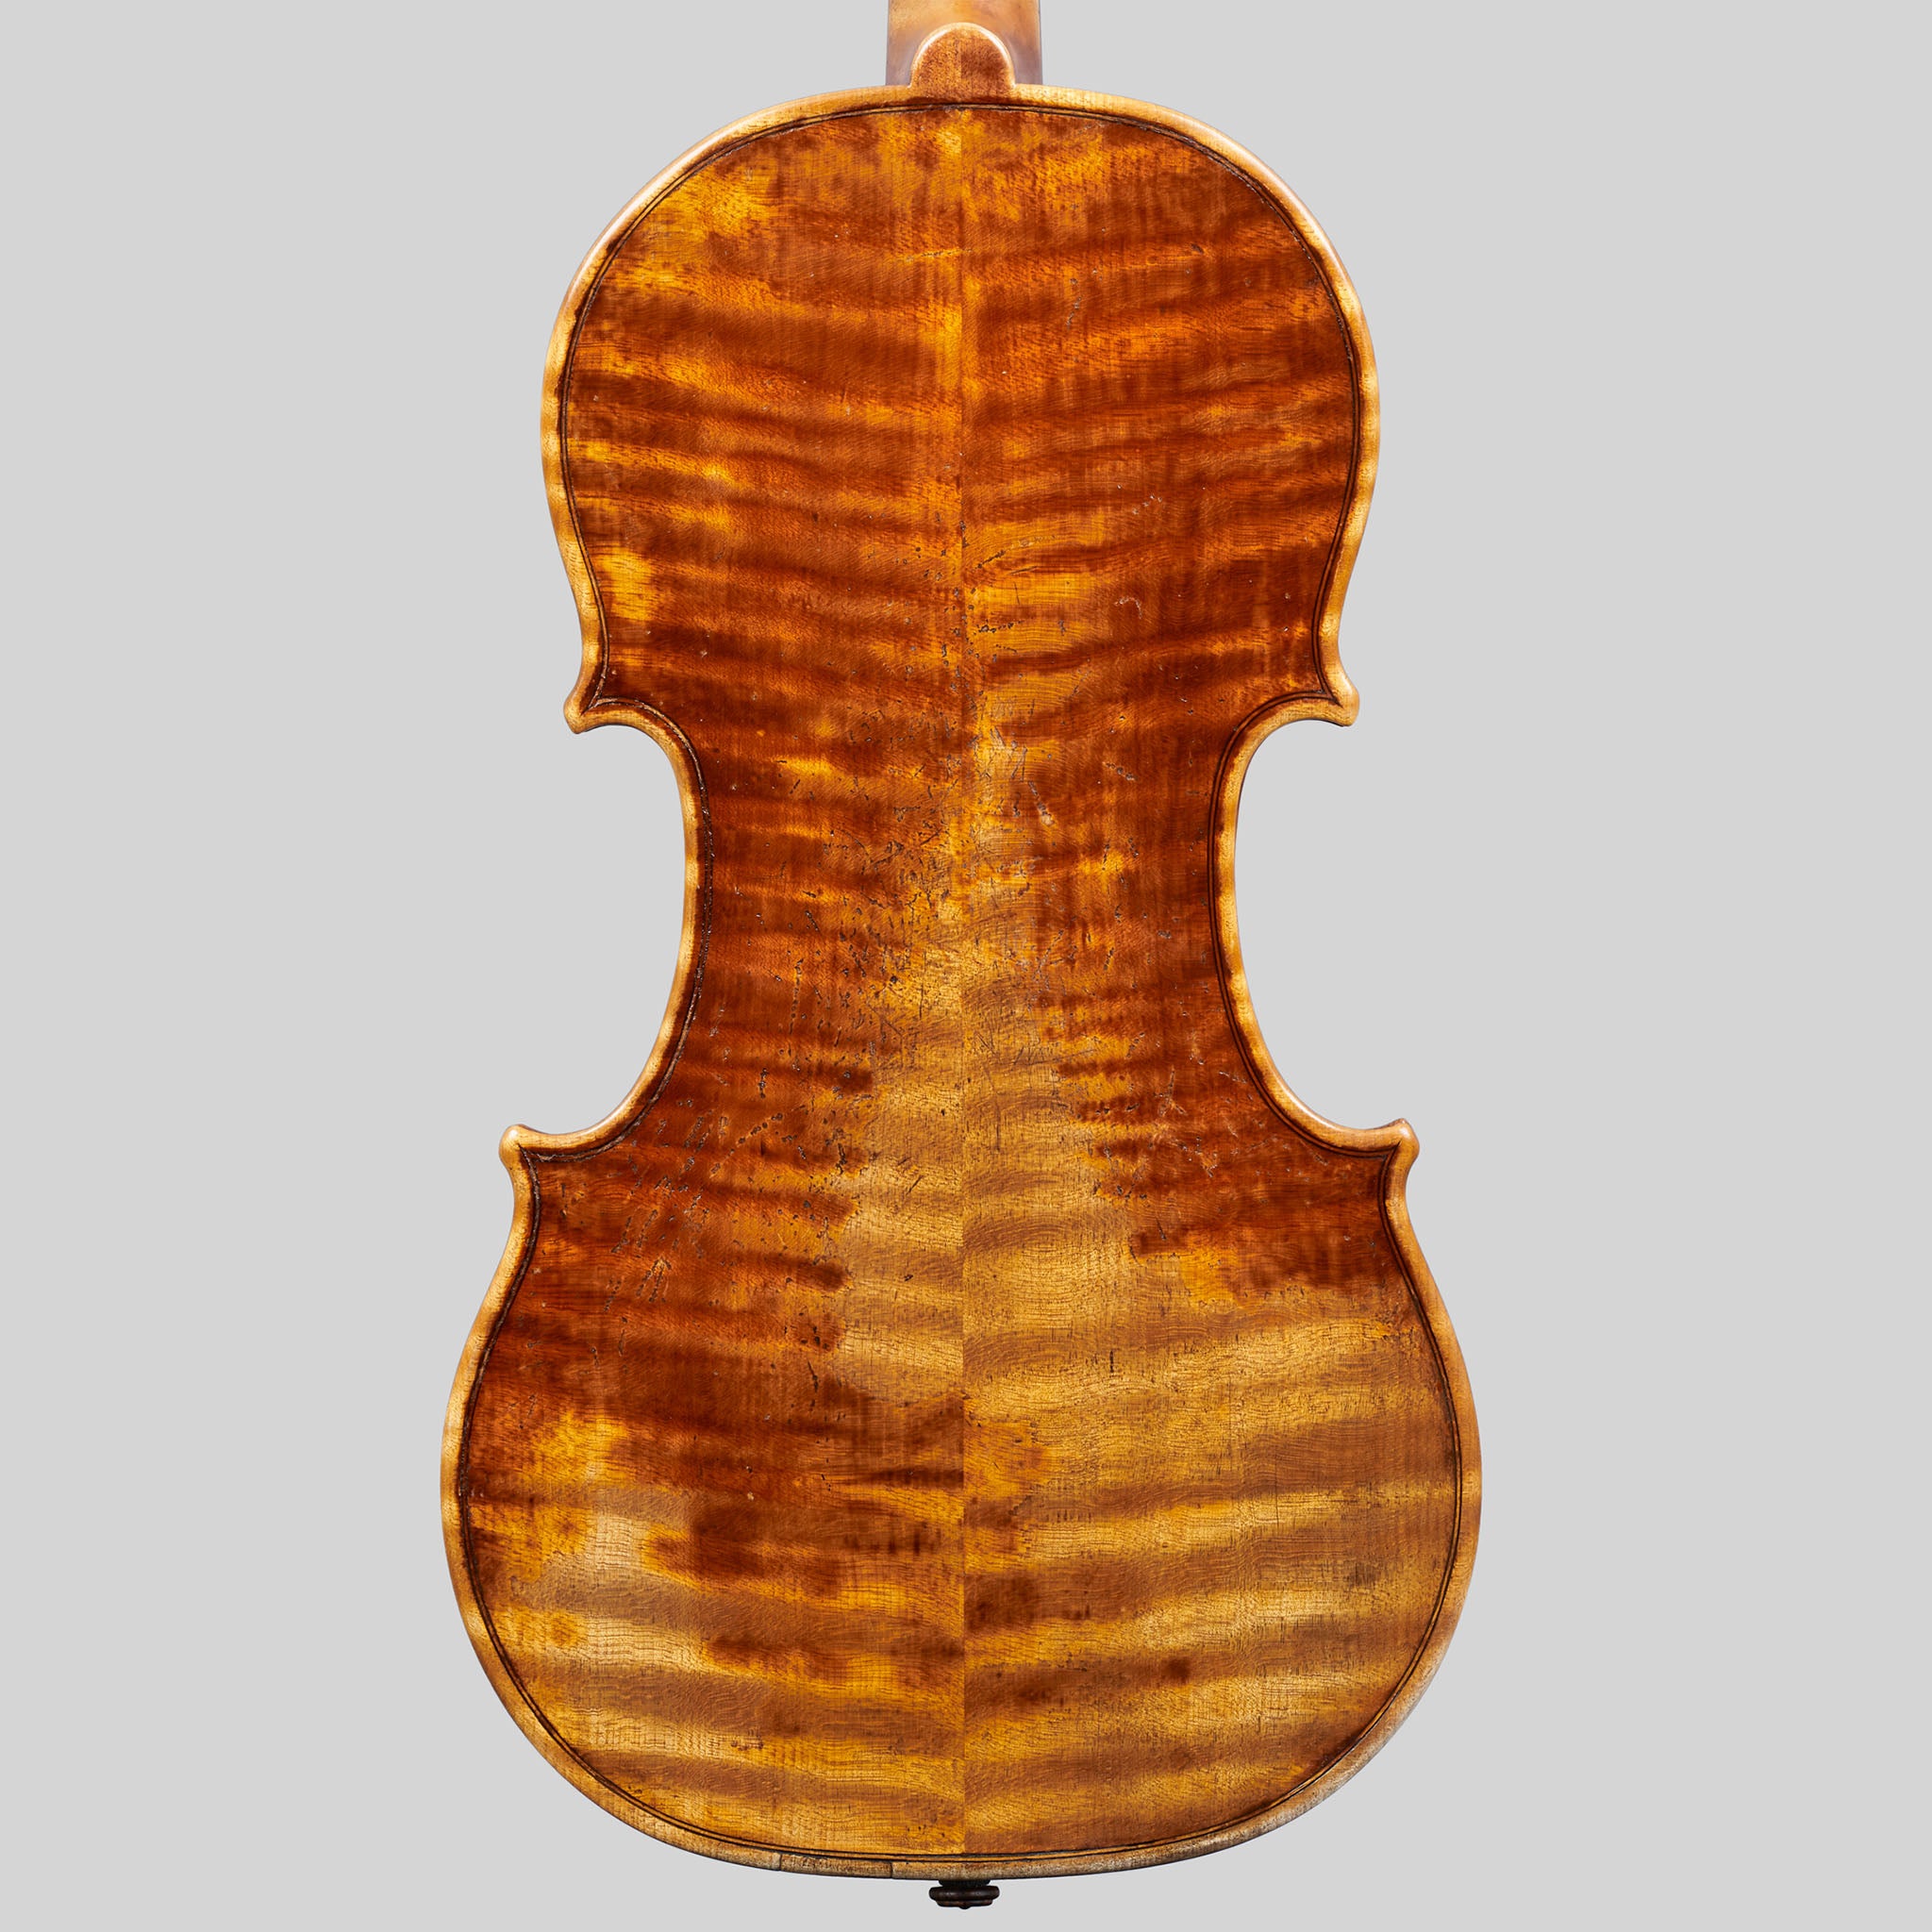 Stefano Gibertoni & Valerio Nalin, Milan "Huberman" Stradivarius Violin 2021